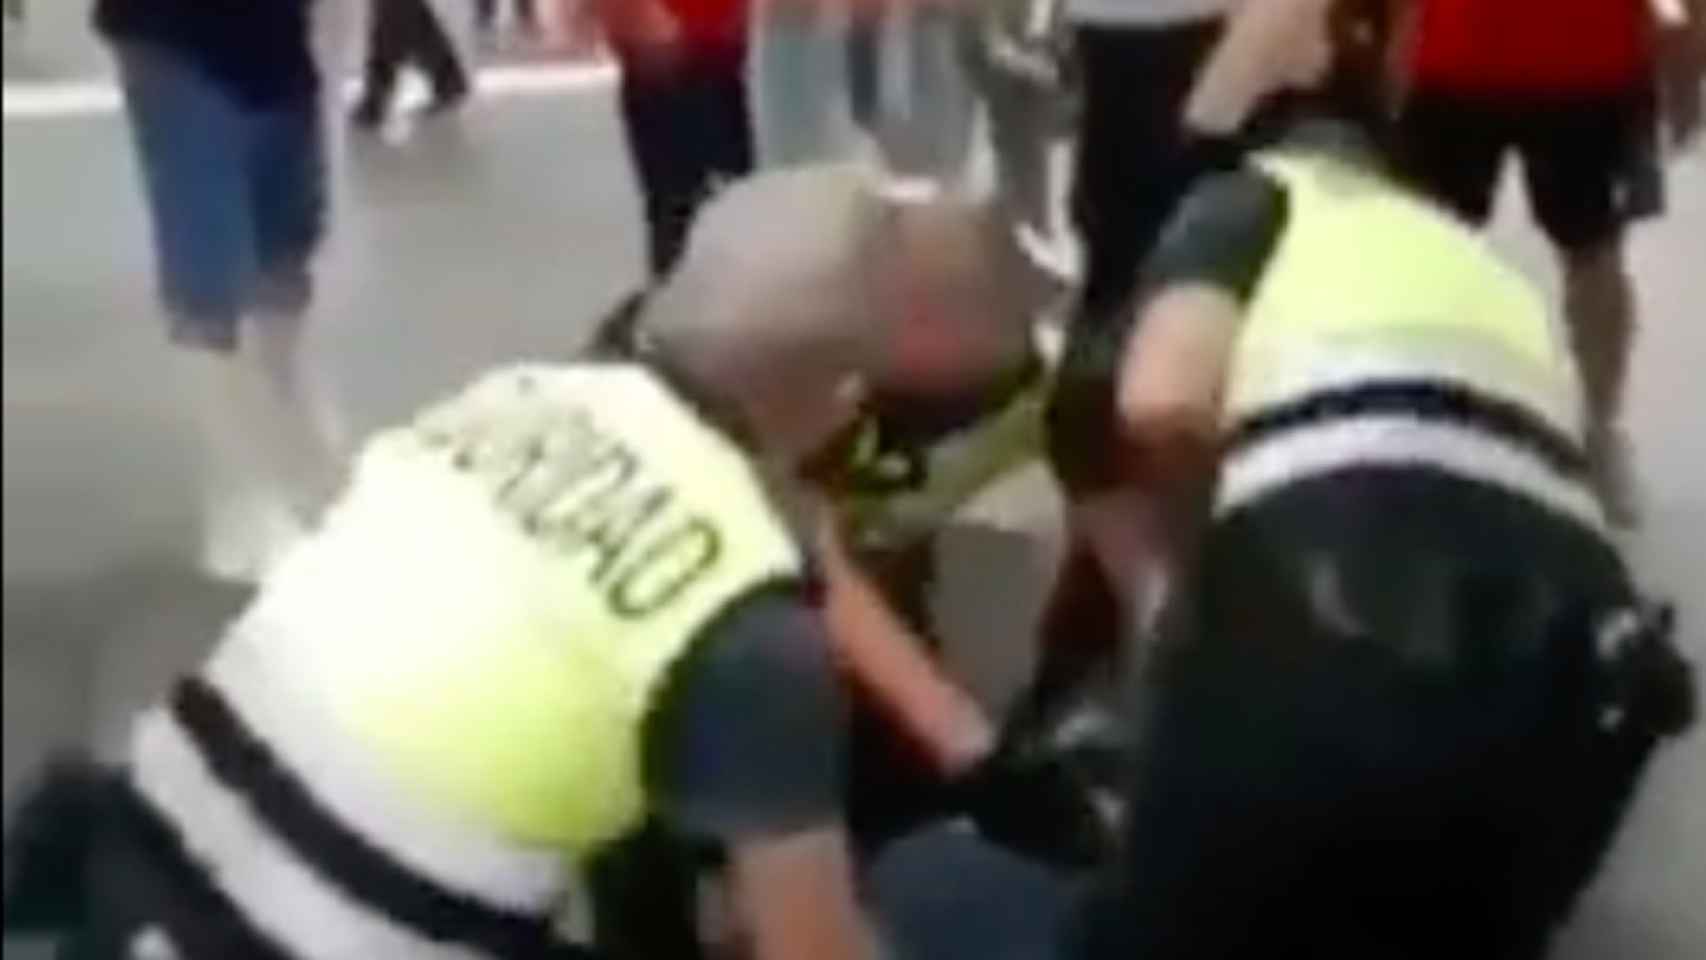 Momento de la detención del joven en la estación de Renfe de plaza Catalunya / MA